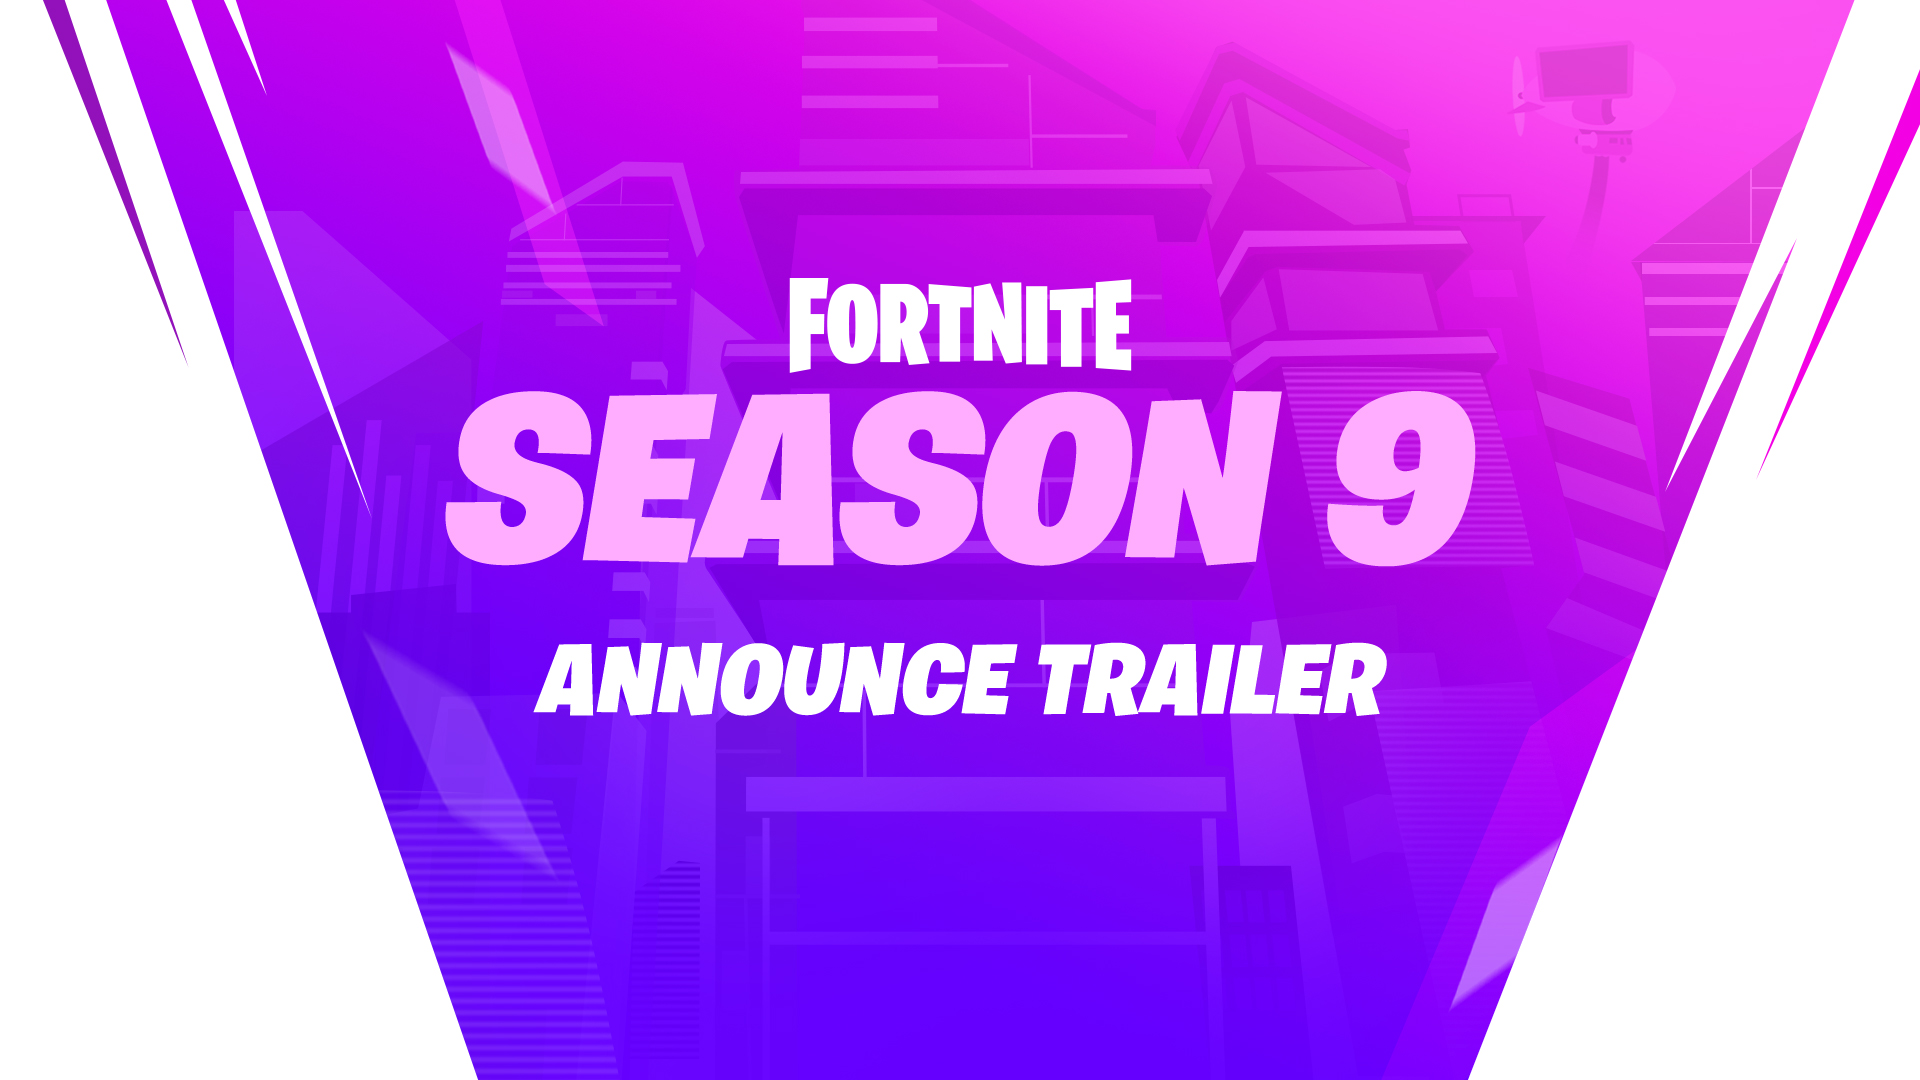 play fortnite season 9 announce trailer outline of a building in pink to black gradient - fortnite laguna starter pack microsoft